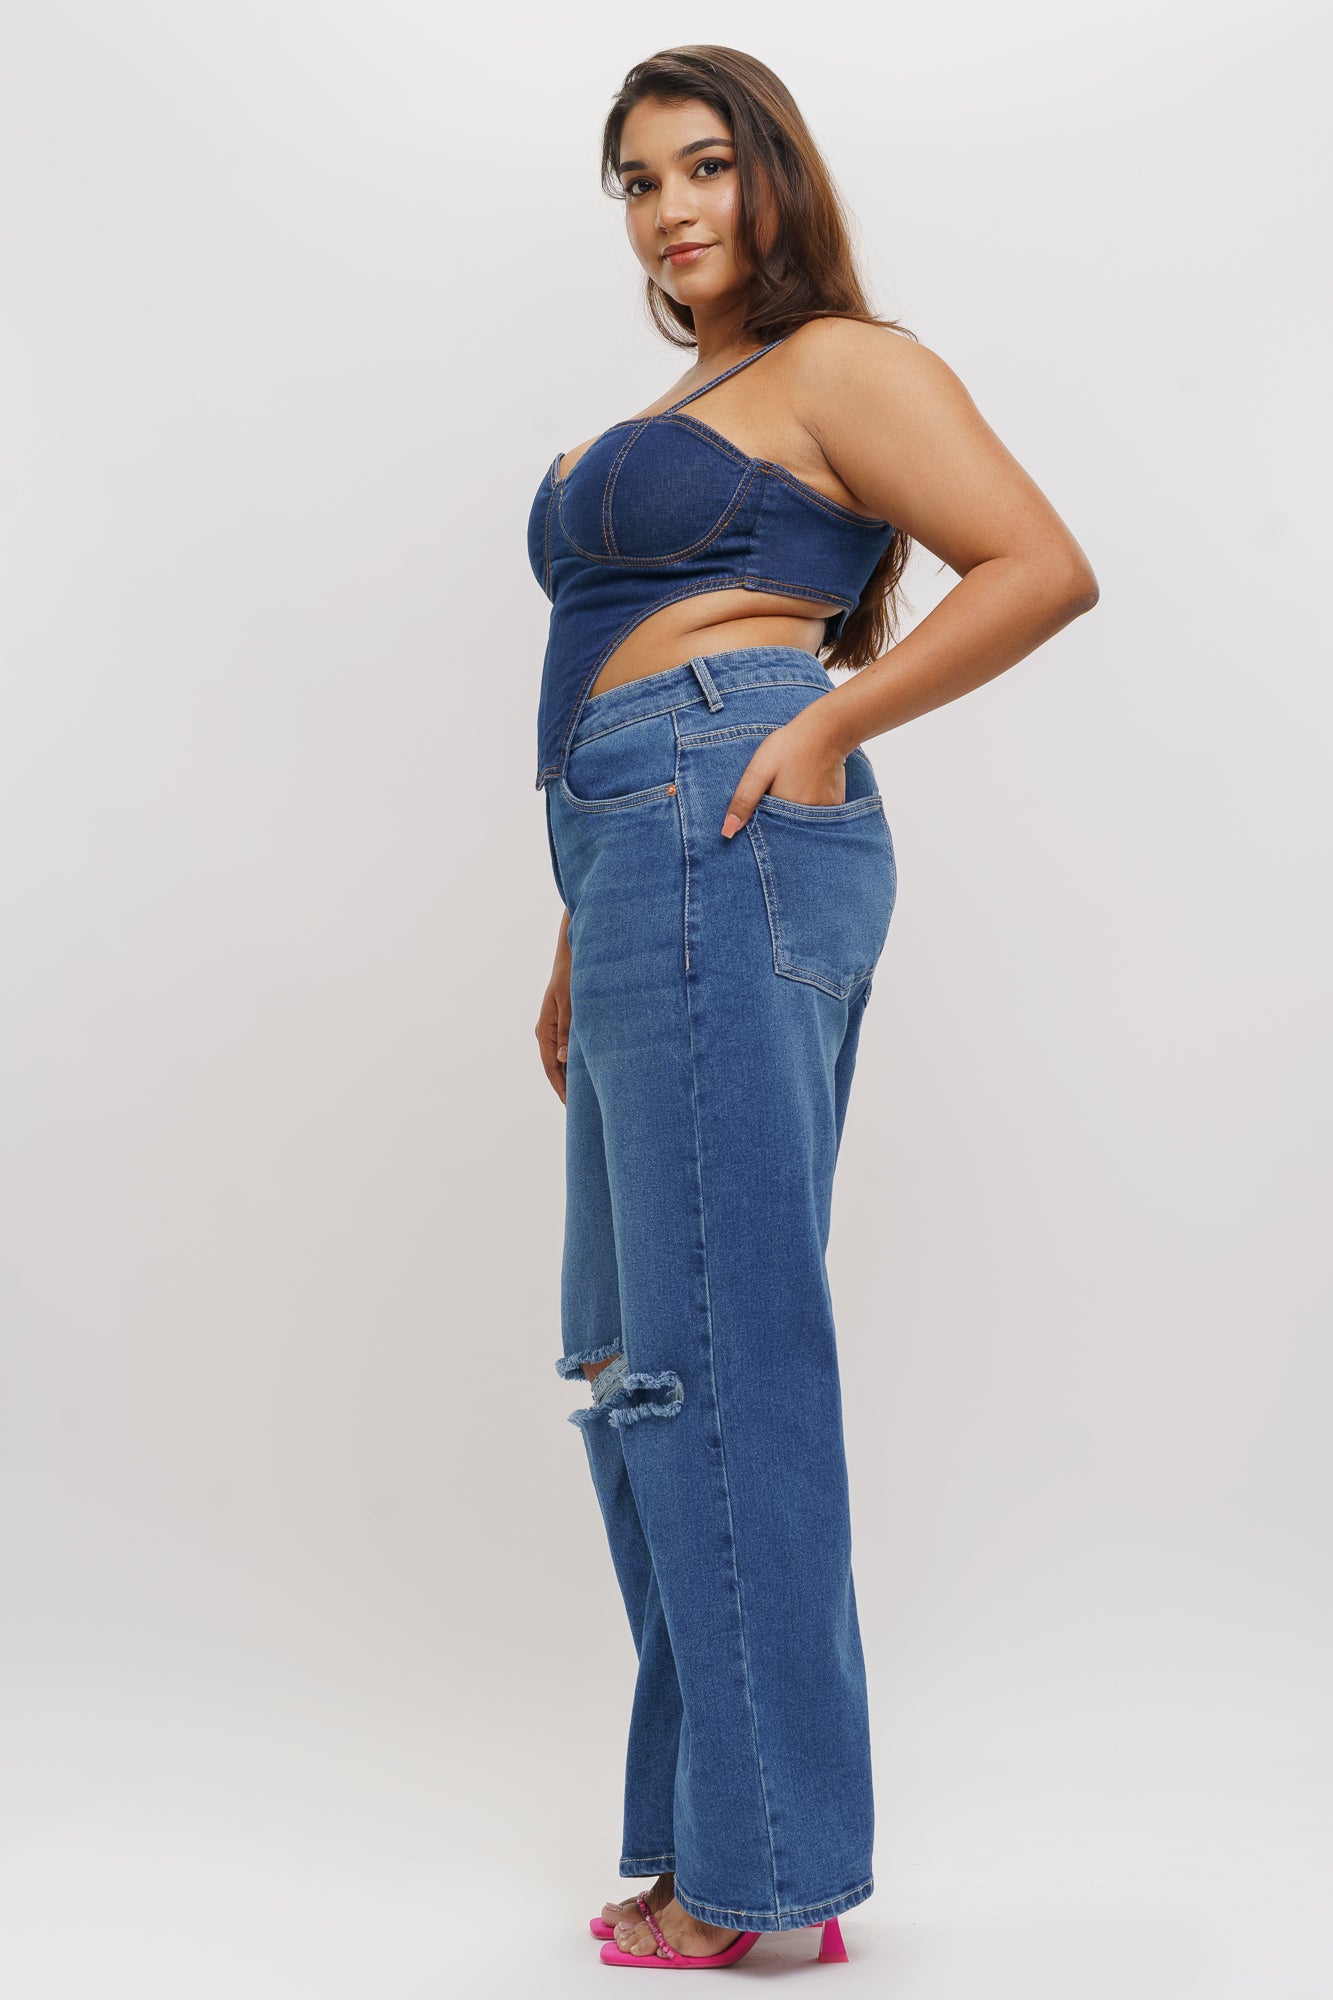 Shoreside- plus size black mom jeans